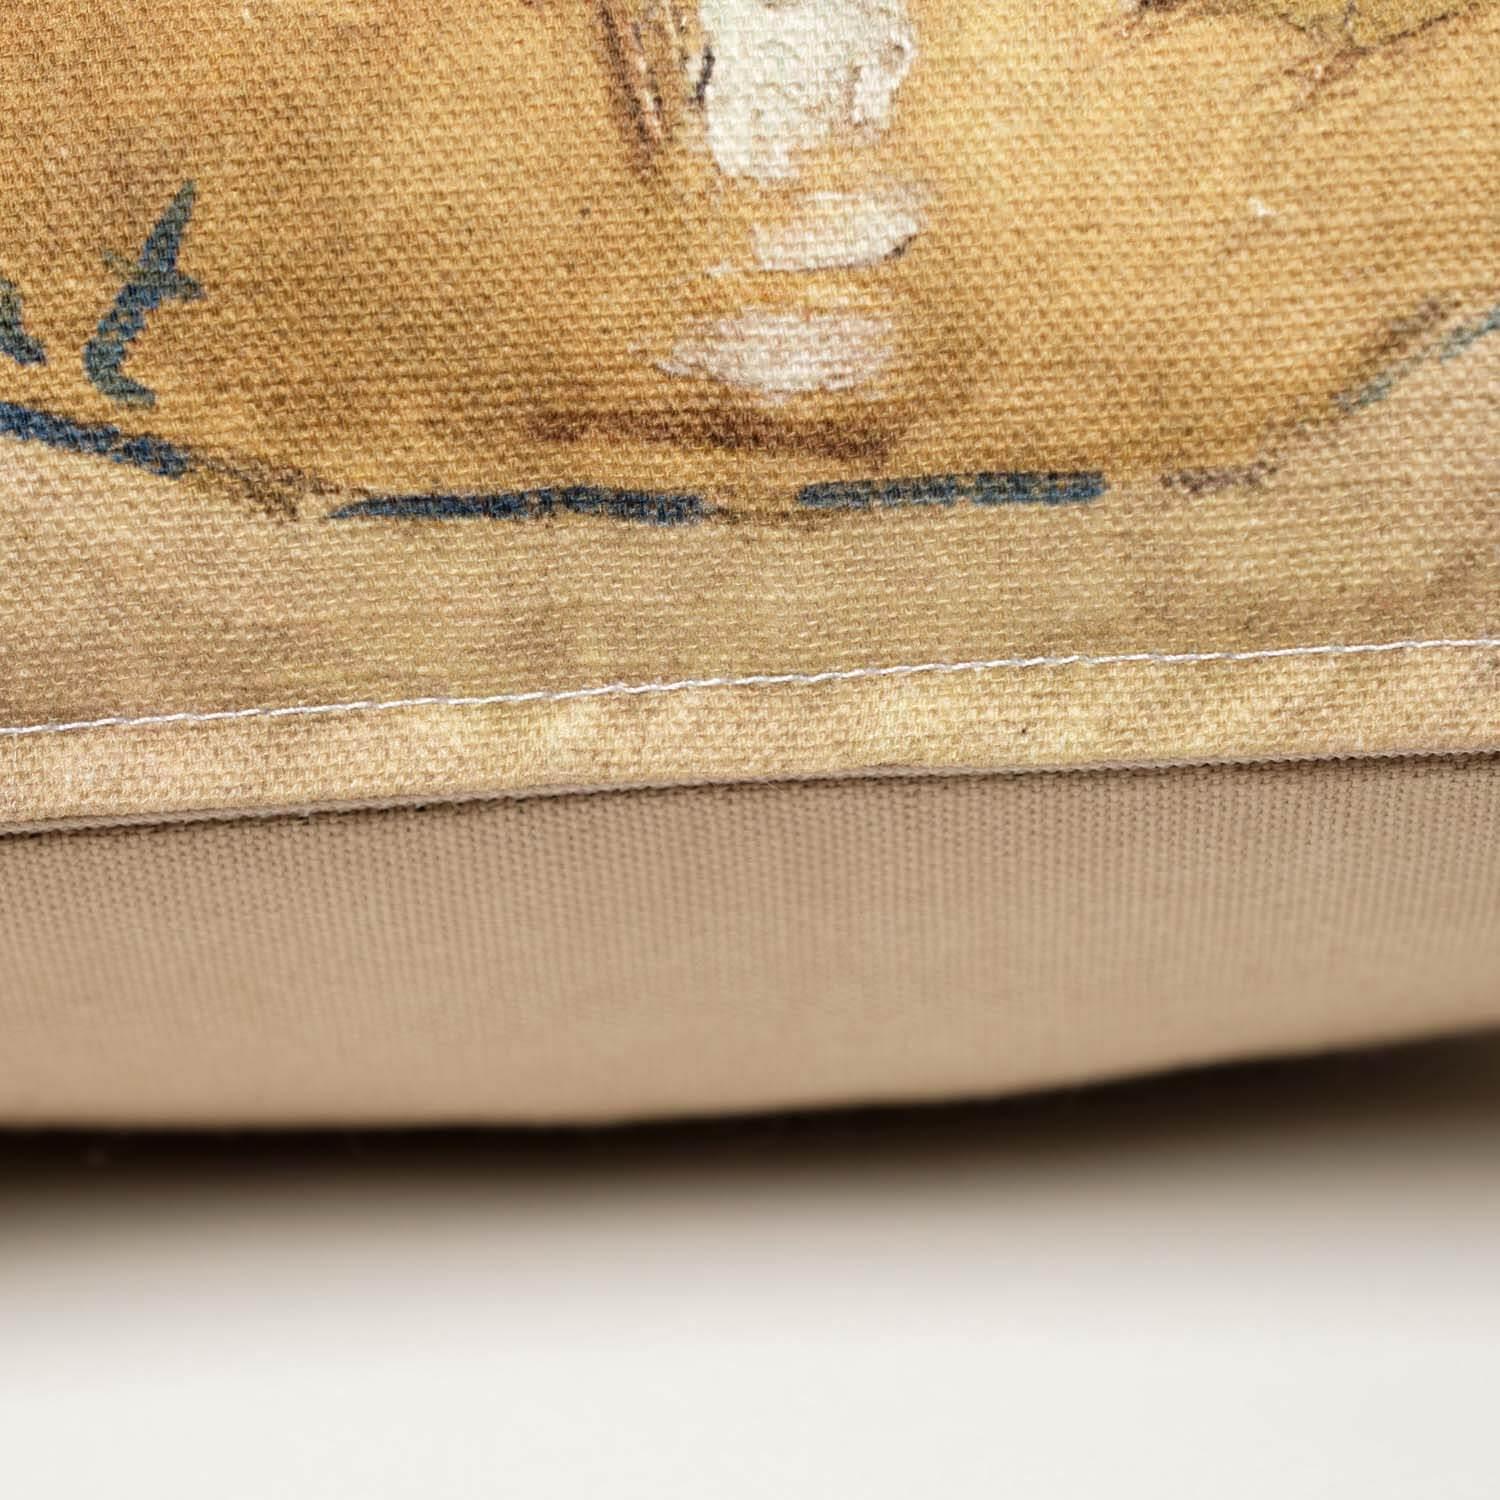 Mr and Mrs Andrews - Thomas Gainsborough - National Gallery Cushion - Handmade Cushions UK - WeLoveCushions